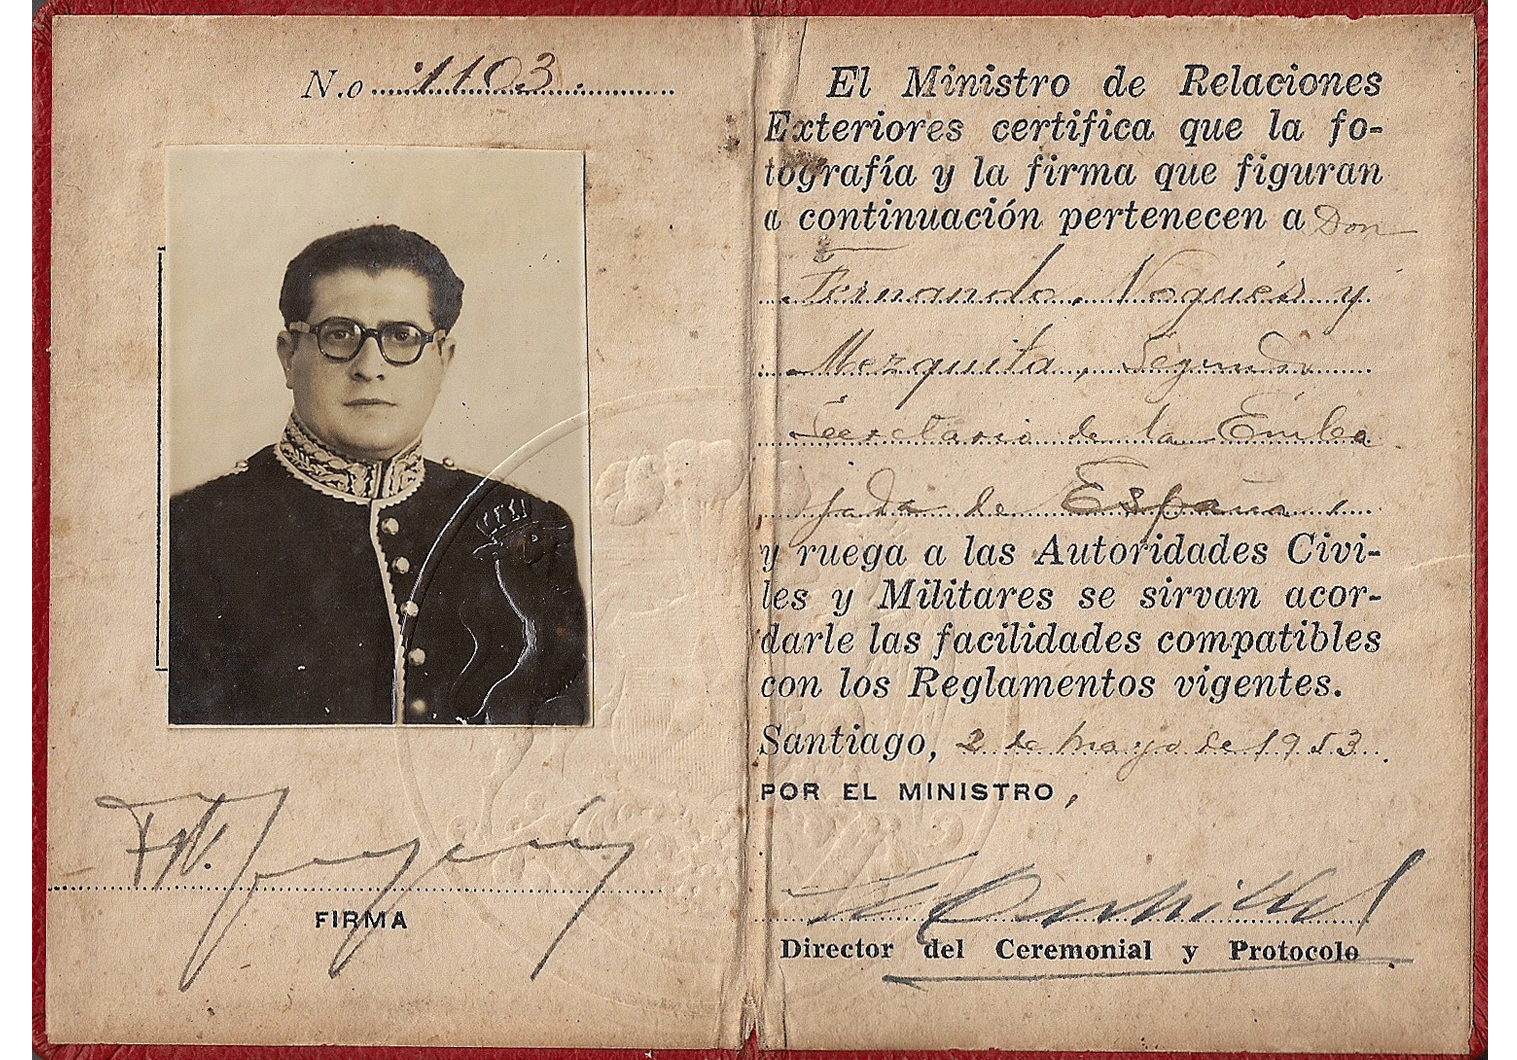 Diplomatic Identity Card